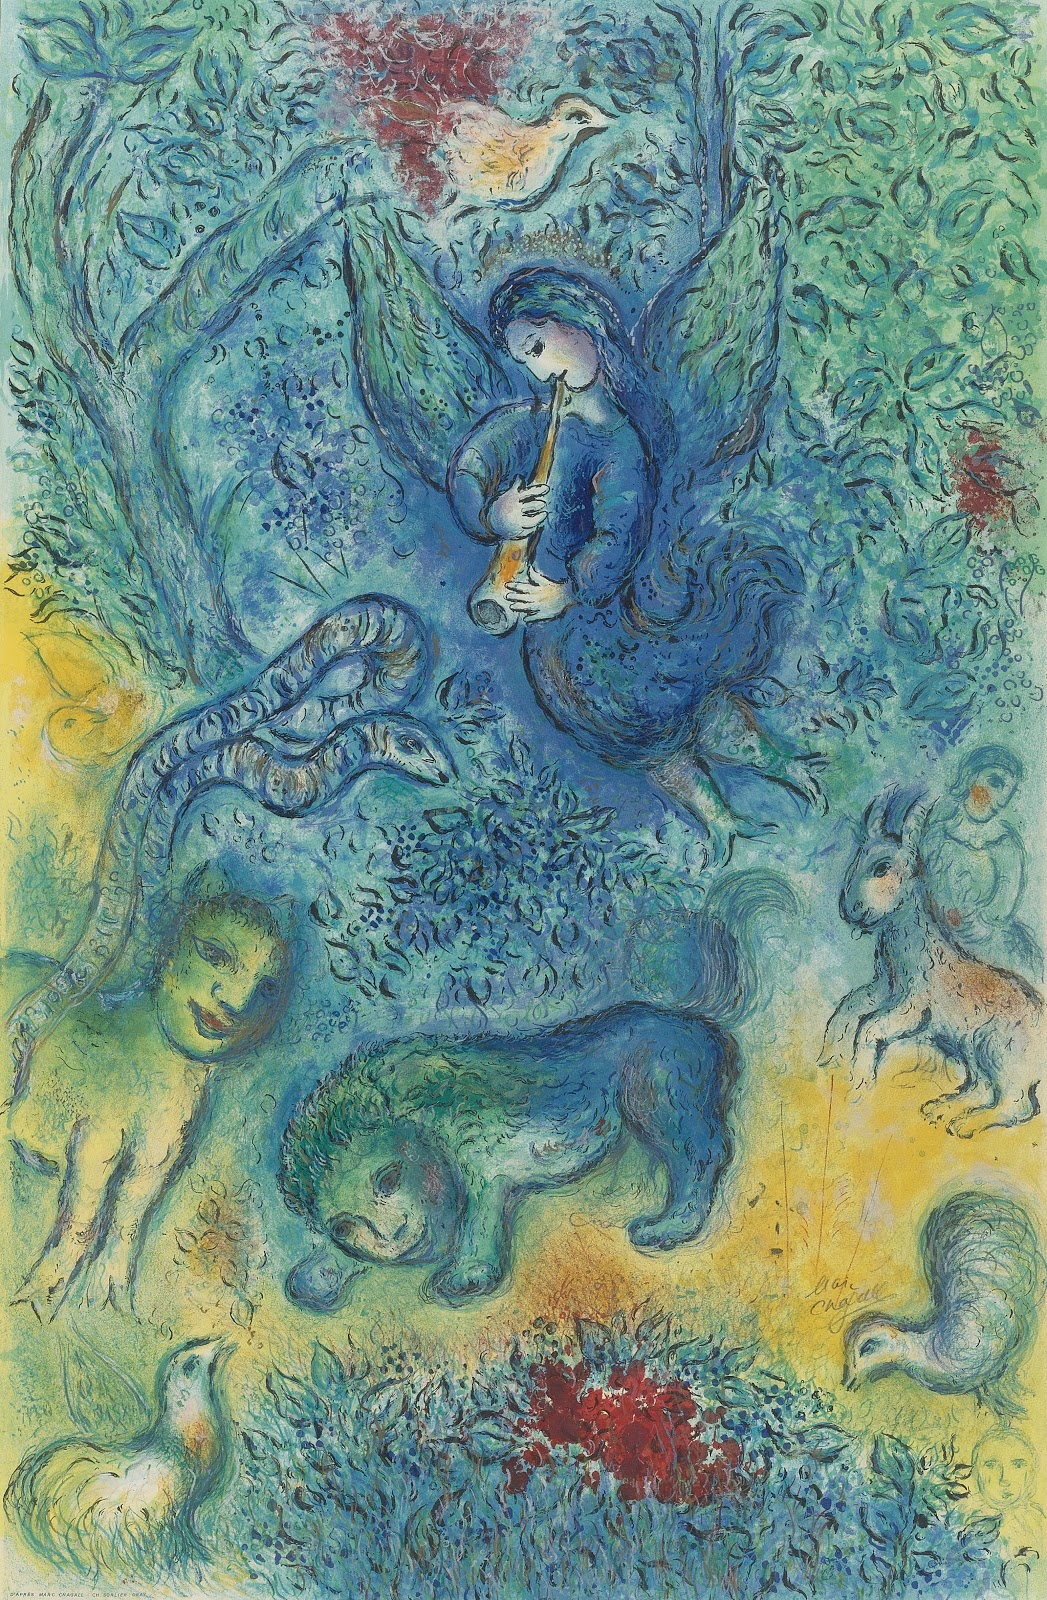 Marc+Chagall-1887-1985 (403).jpg